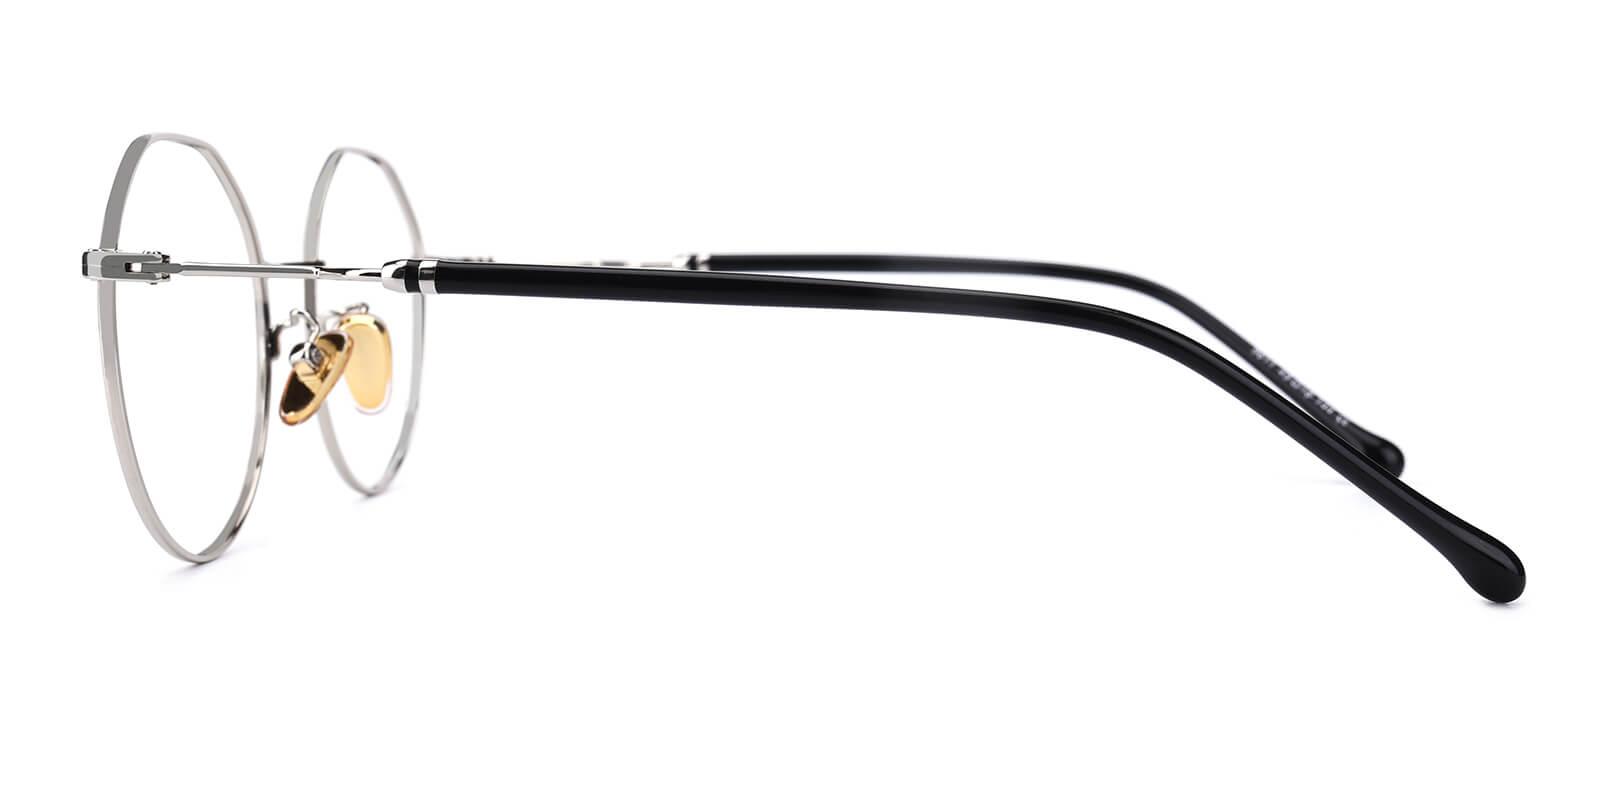 Clarker-Silver-Geometric-Metal-Eyeglasses-detail